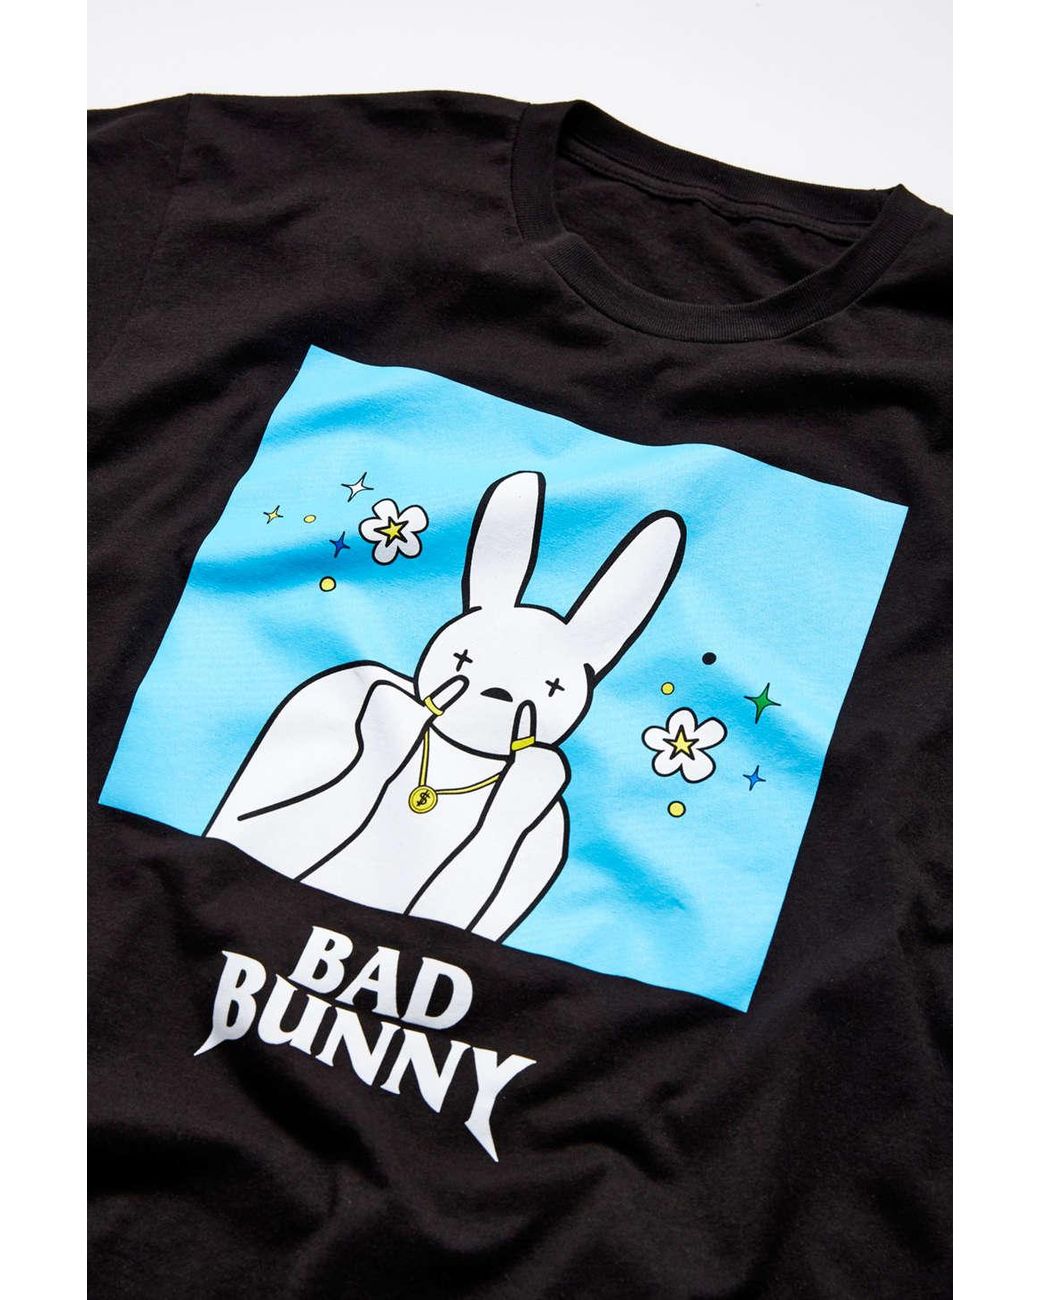 424 Bad Bunny T-Shirt Black Men's - FW21 - US